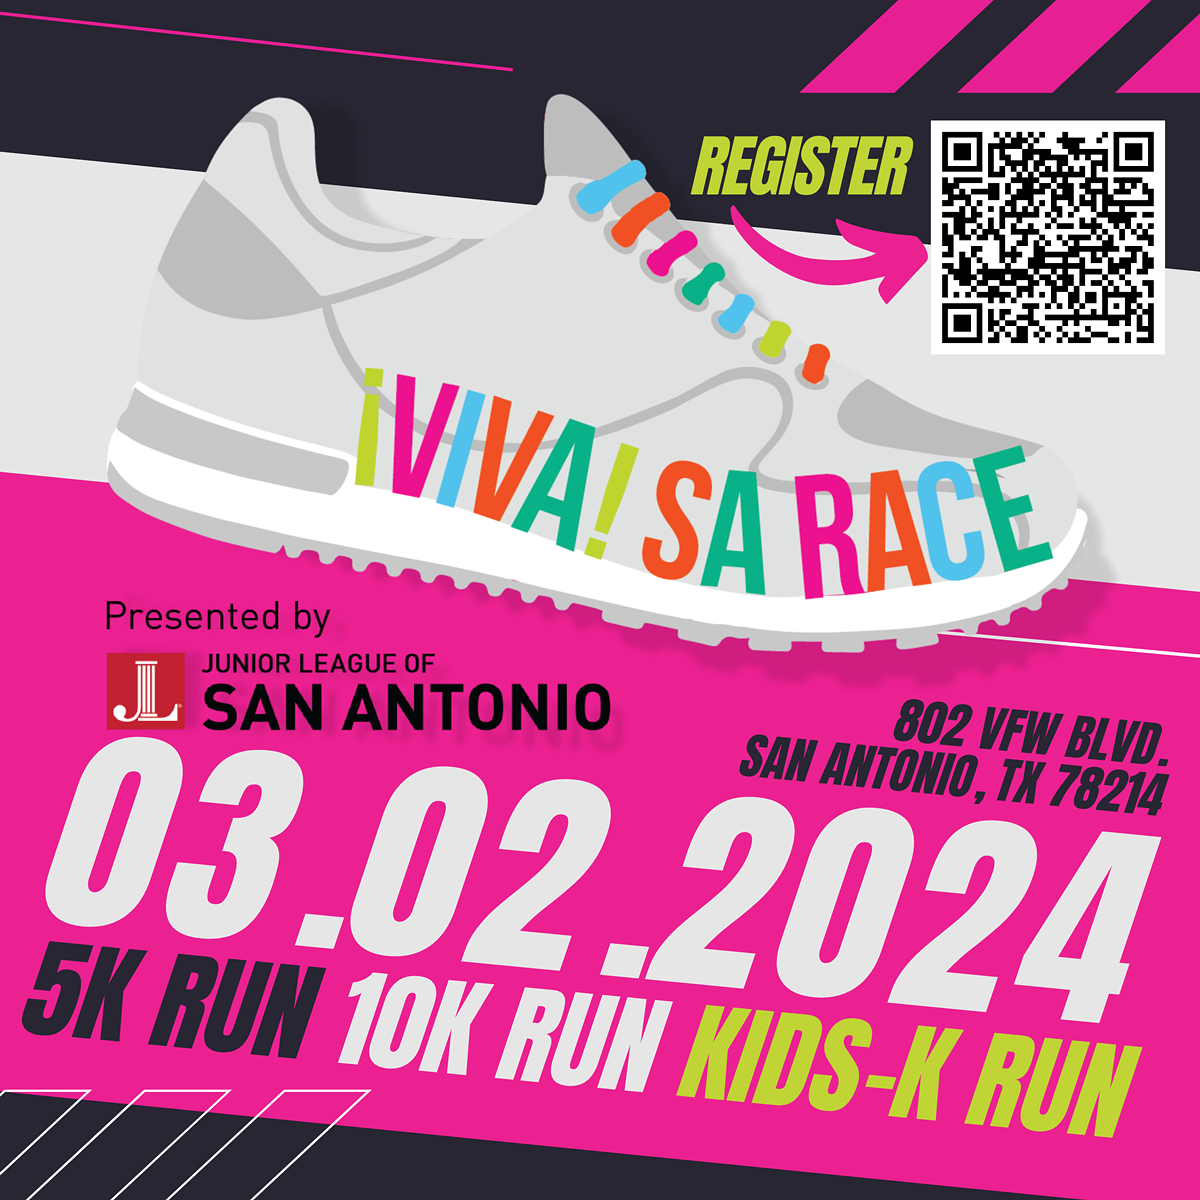 Join us at the ¡VIVA! SA Race!